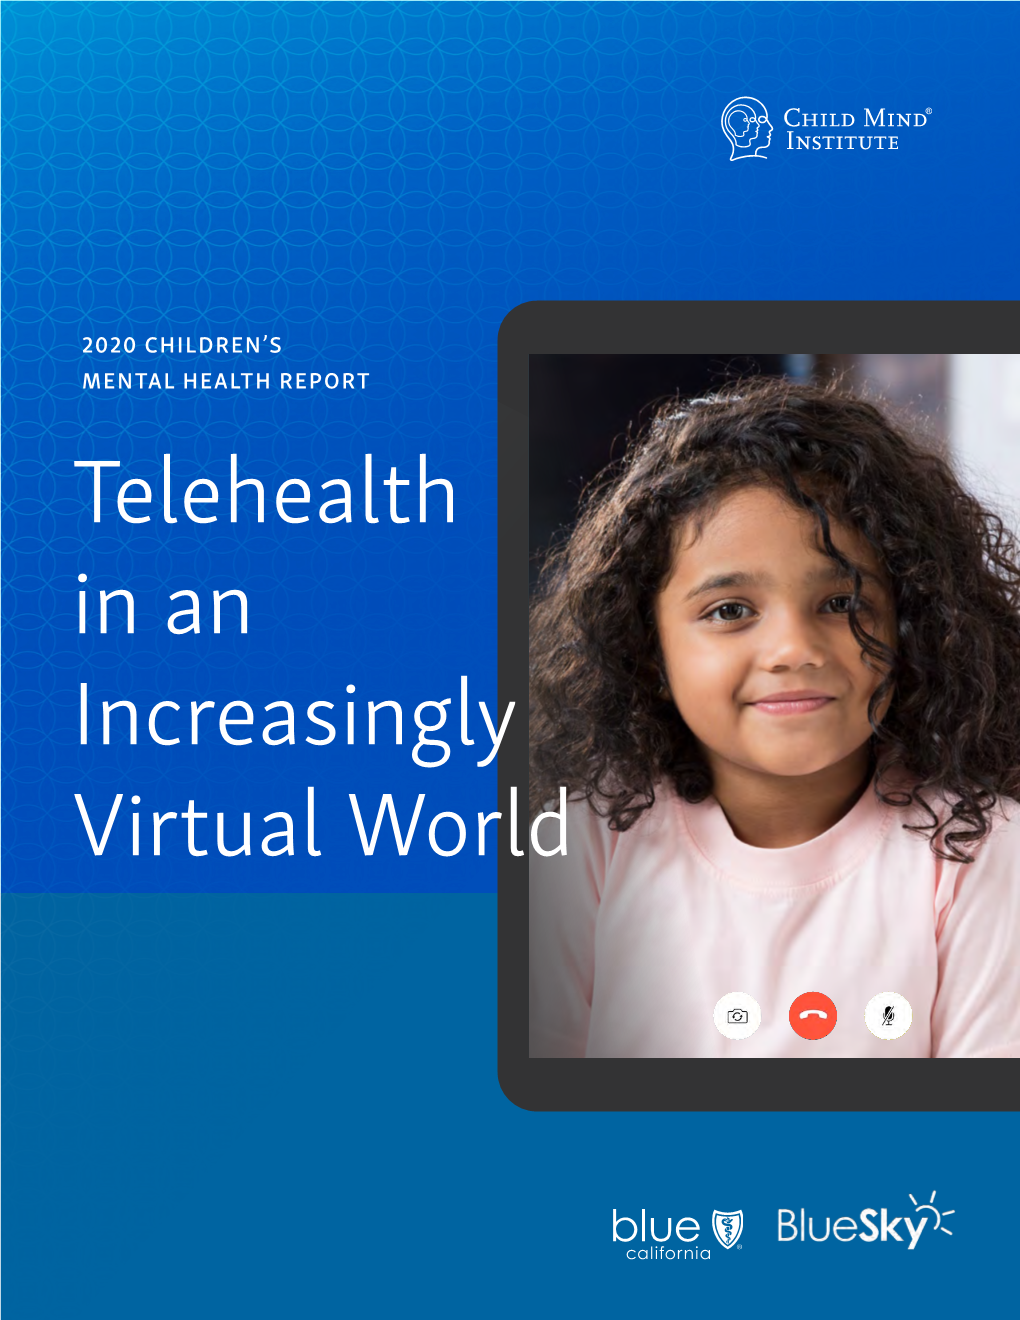 Telehealth in an Increasingly Virtual World